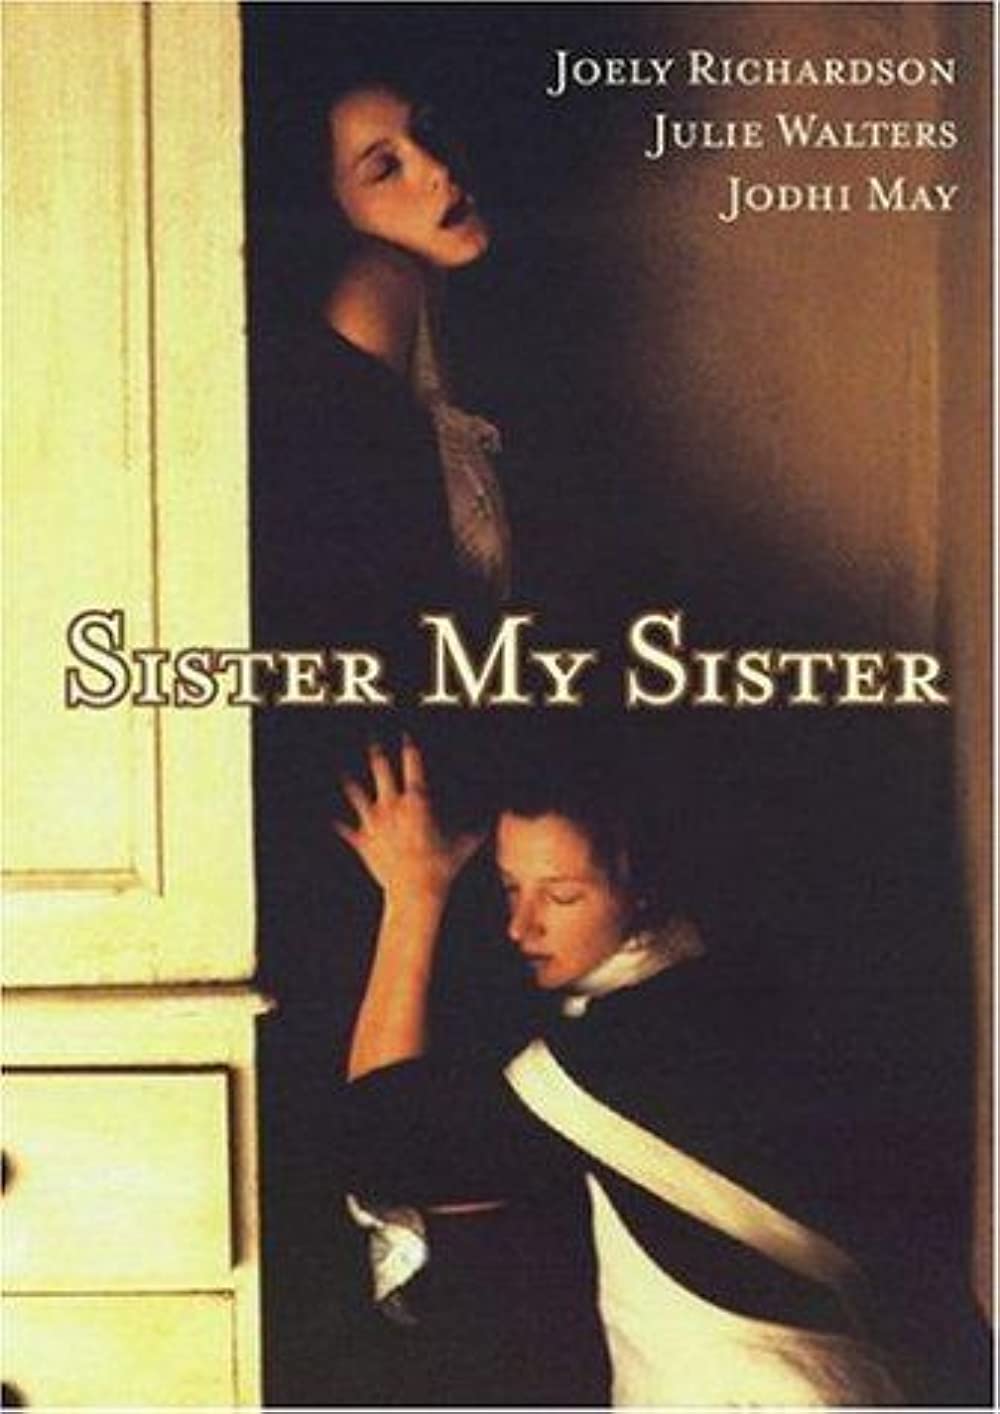 Filmbeschreibung zu Sister My Sister (OV)